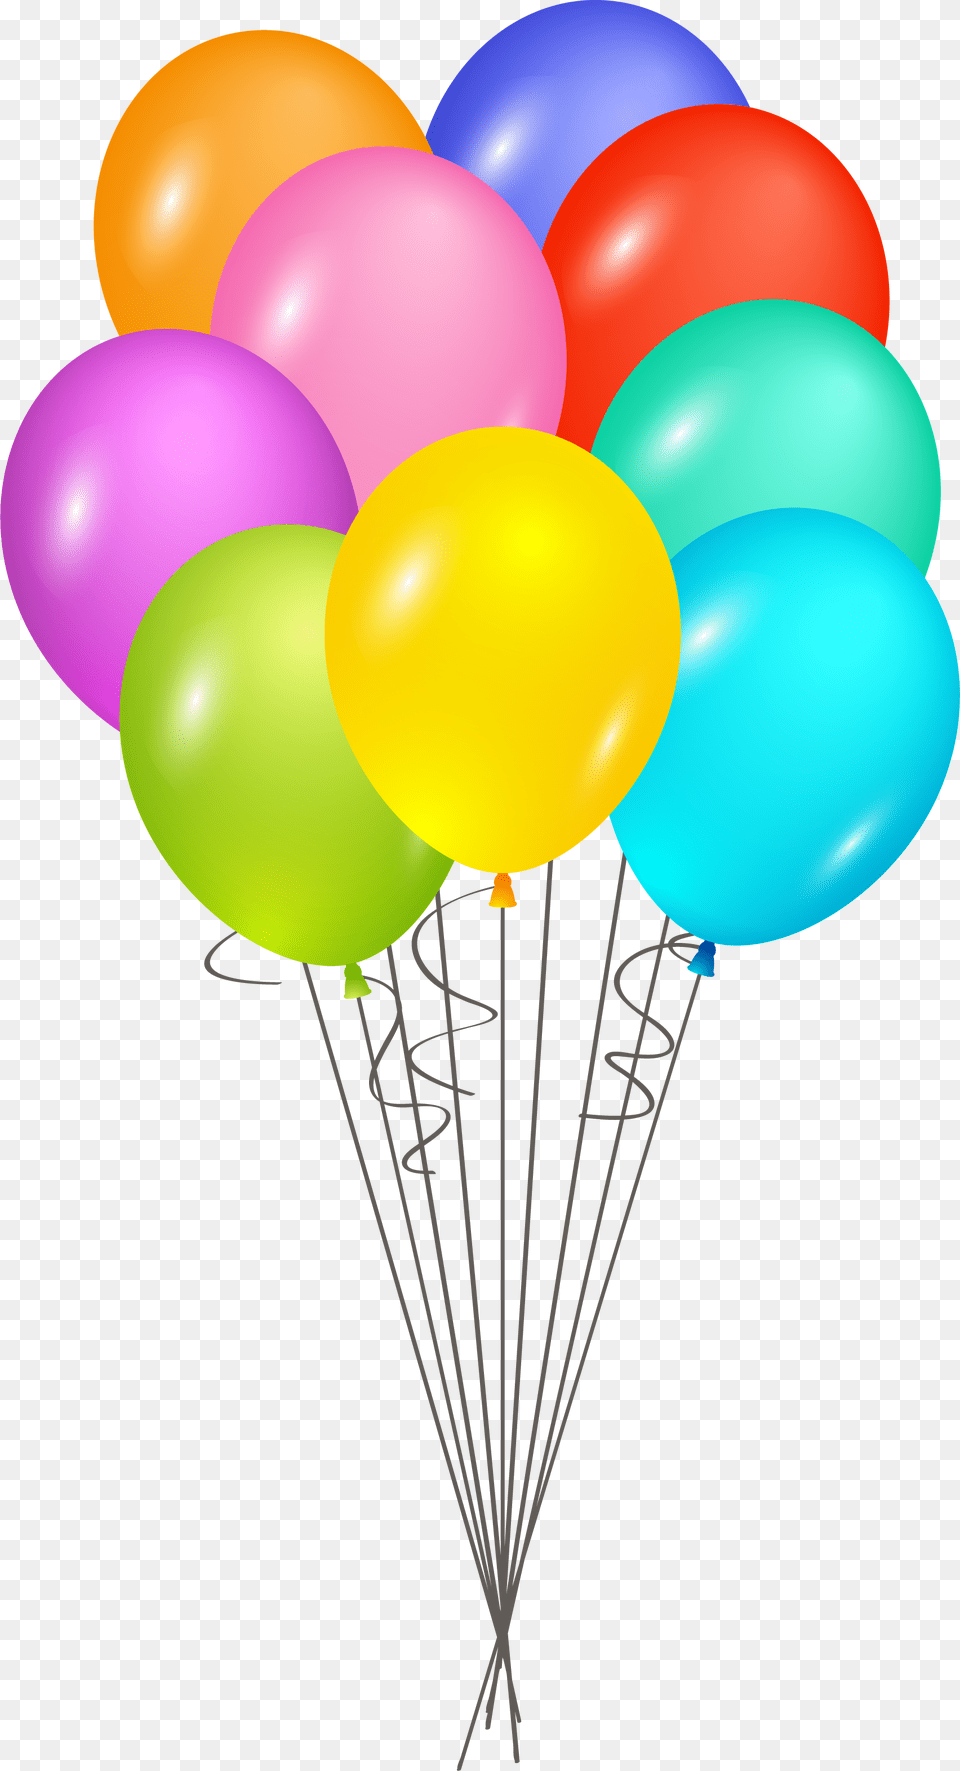 Island Vector Happy Birthday Happy Birthday Balloons Psd, Balloon Png Image